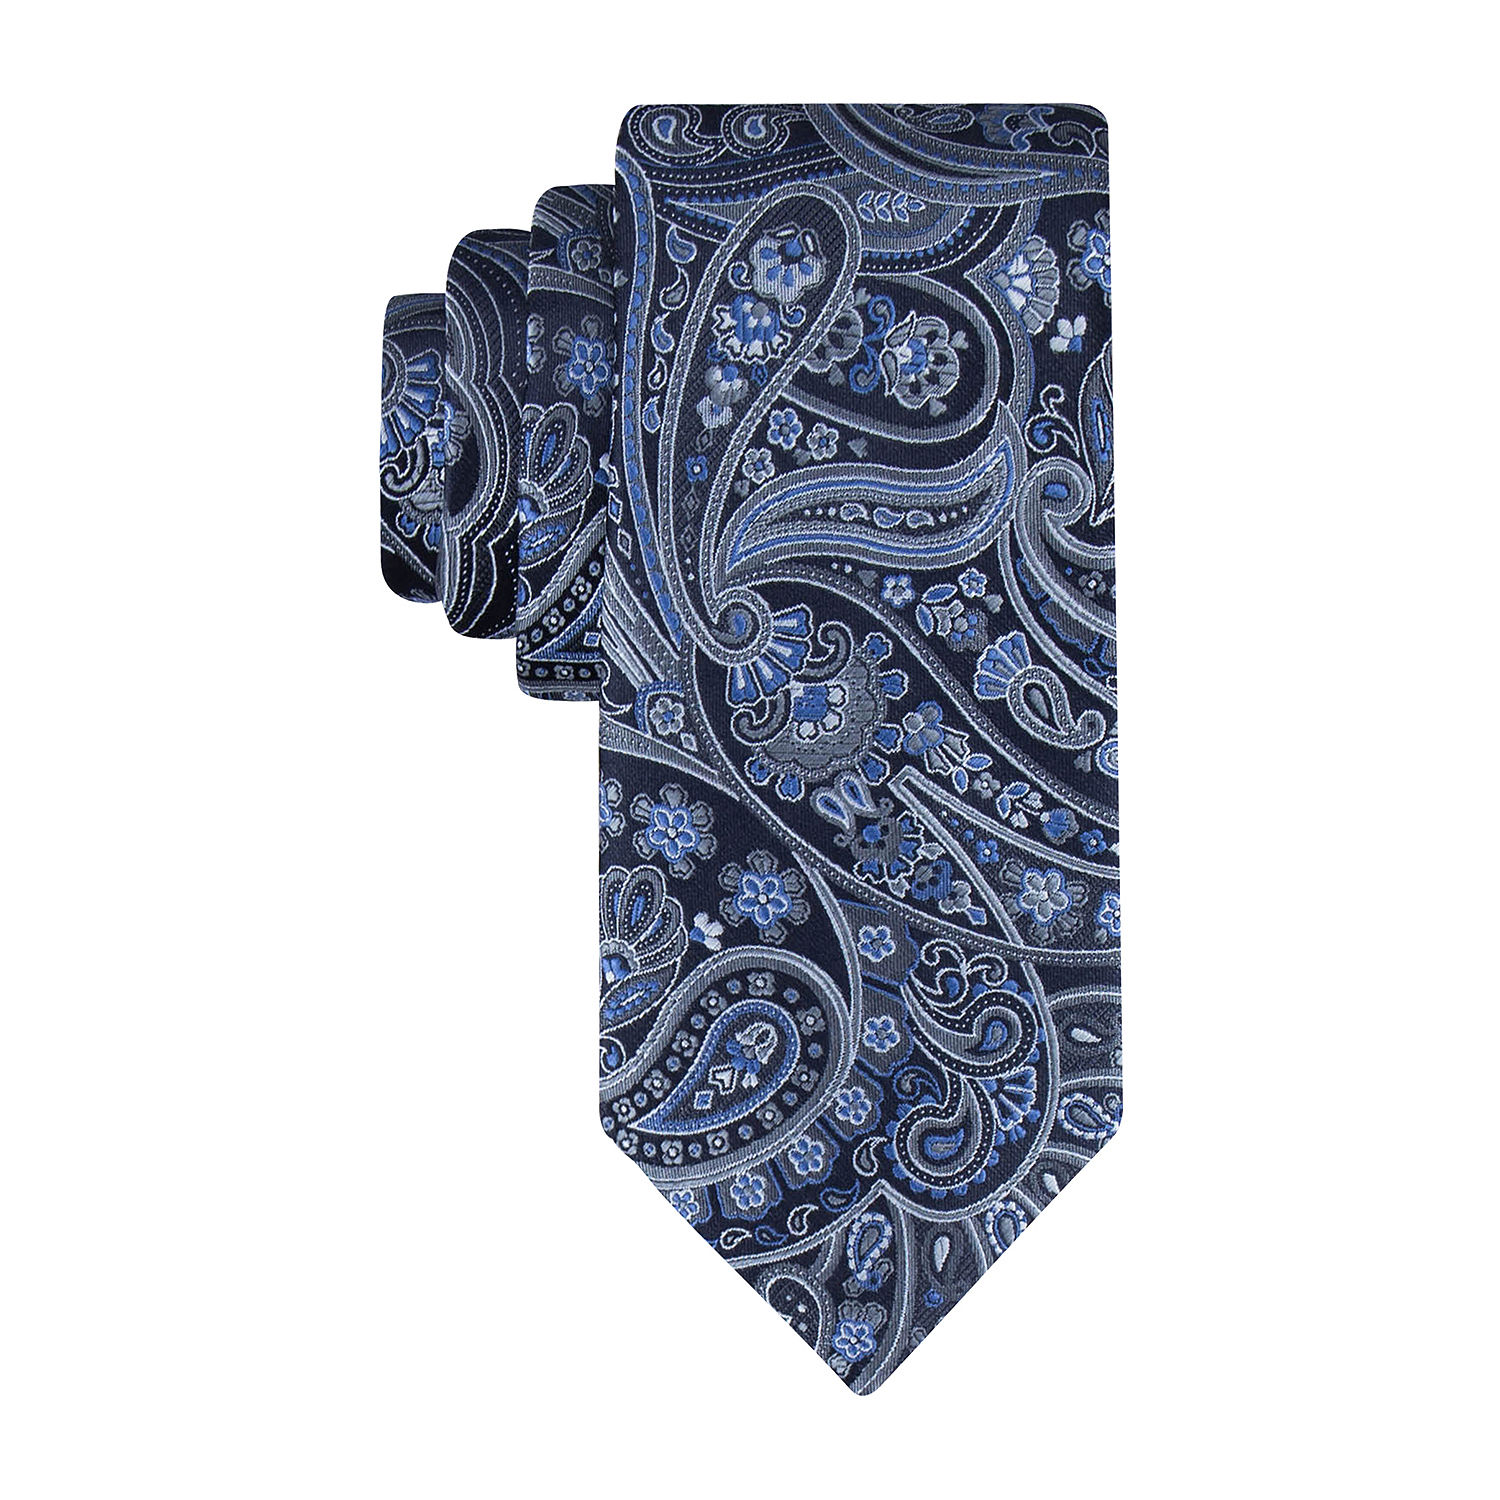 Haggar Fiona Paisley Tie, Color: Black Blue - JCPenney